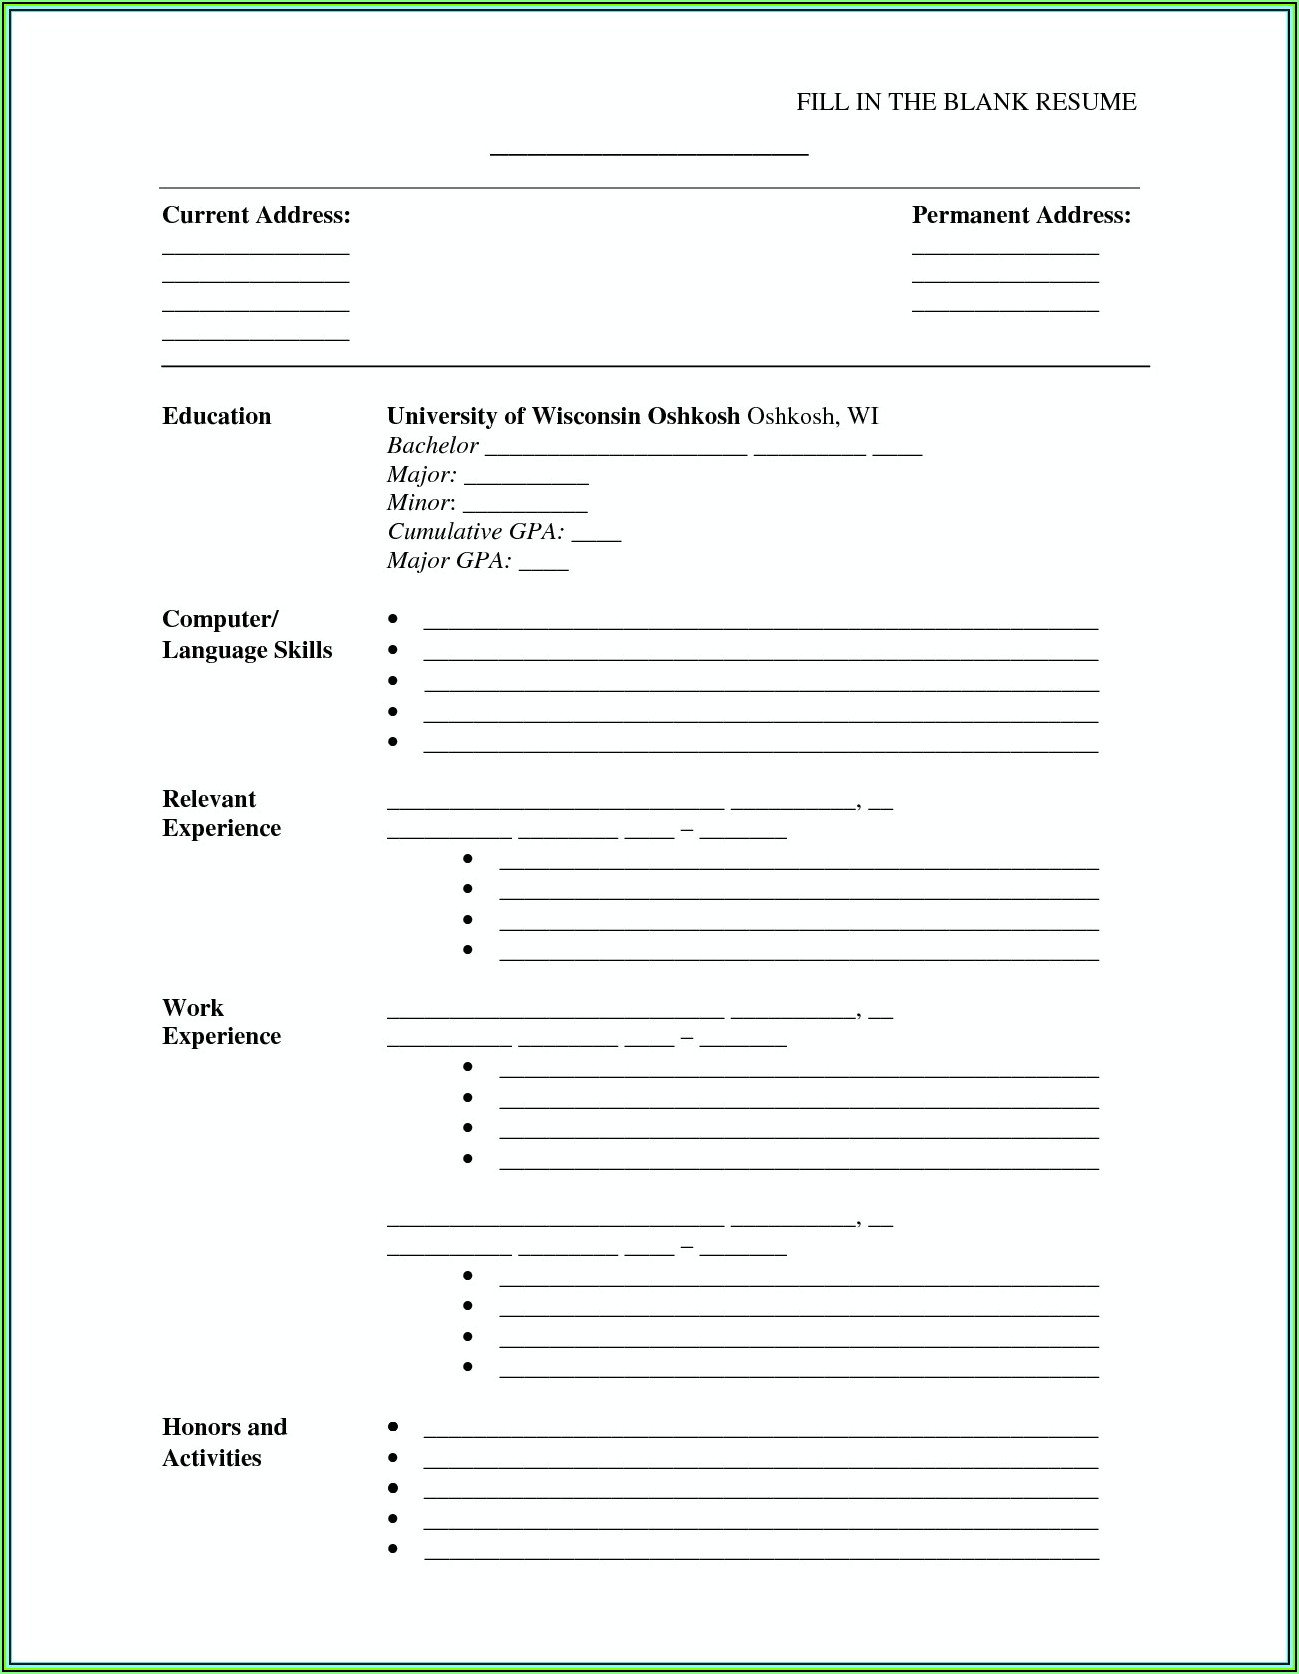 Resume Sample Blank Form